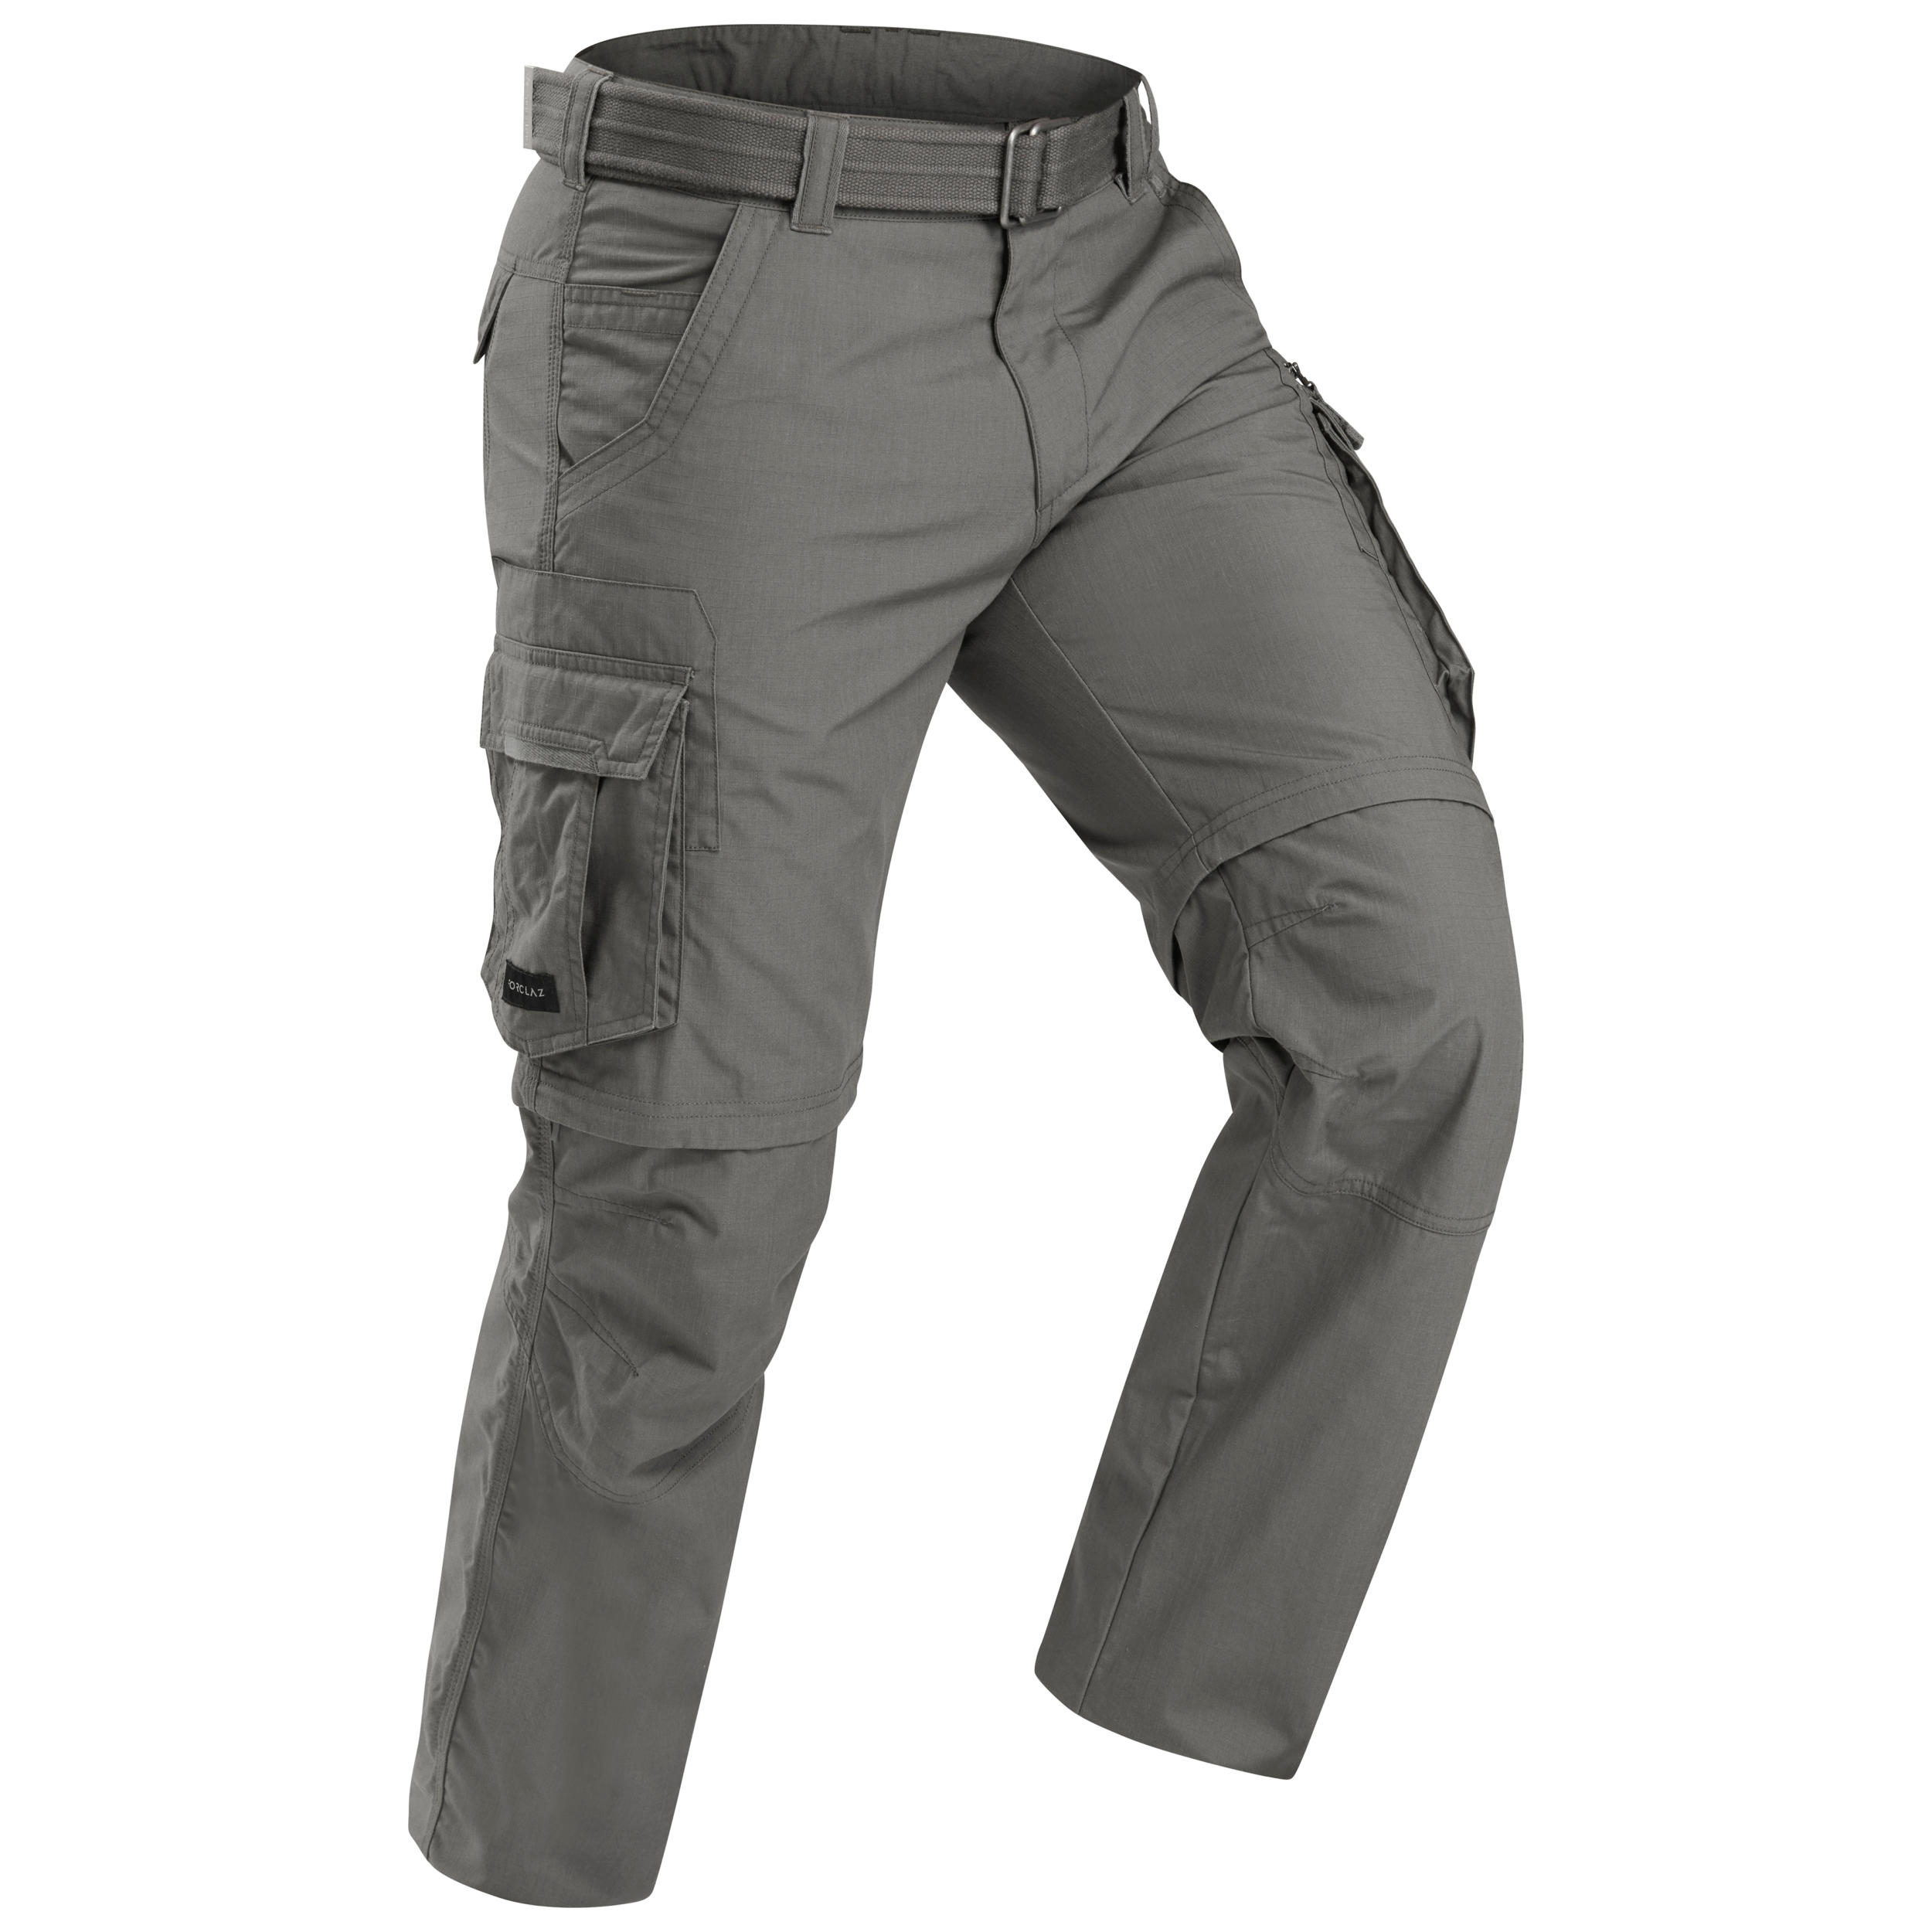 Men’s Convertible Hiking Pants - MH 550